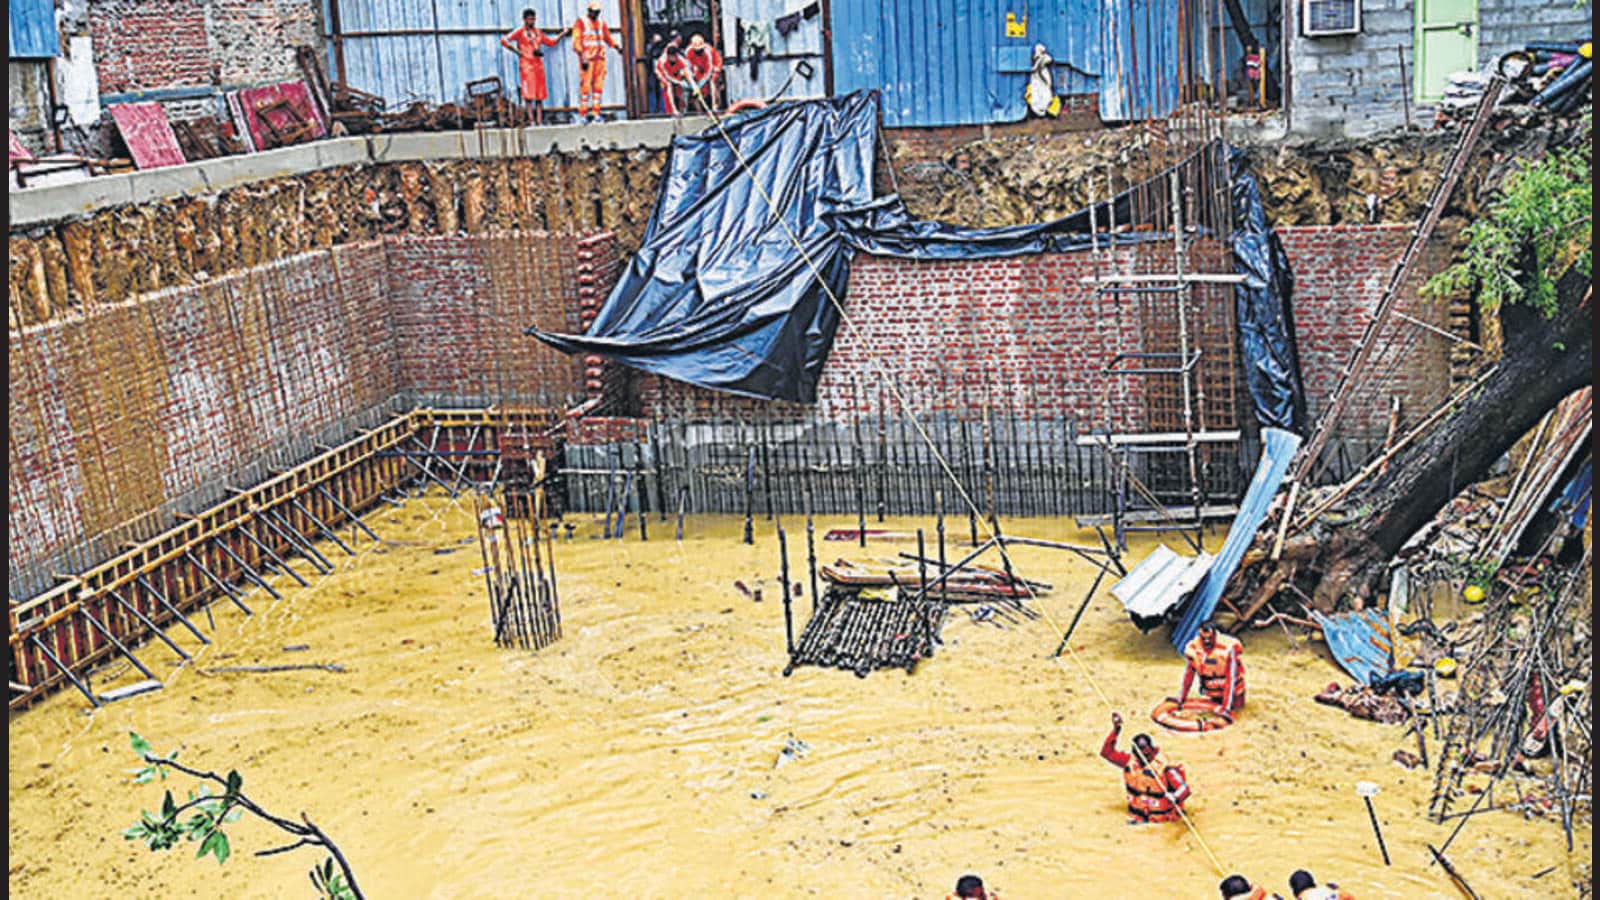 Vasant Vihar construction site deaths: Two arrested Mediainsights.in